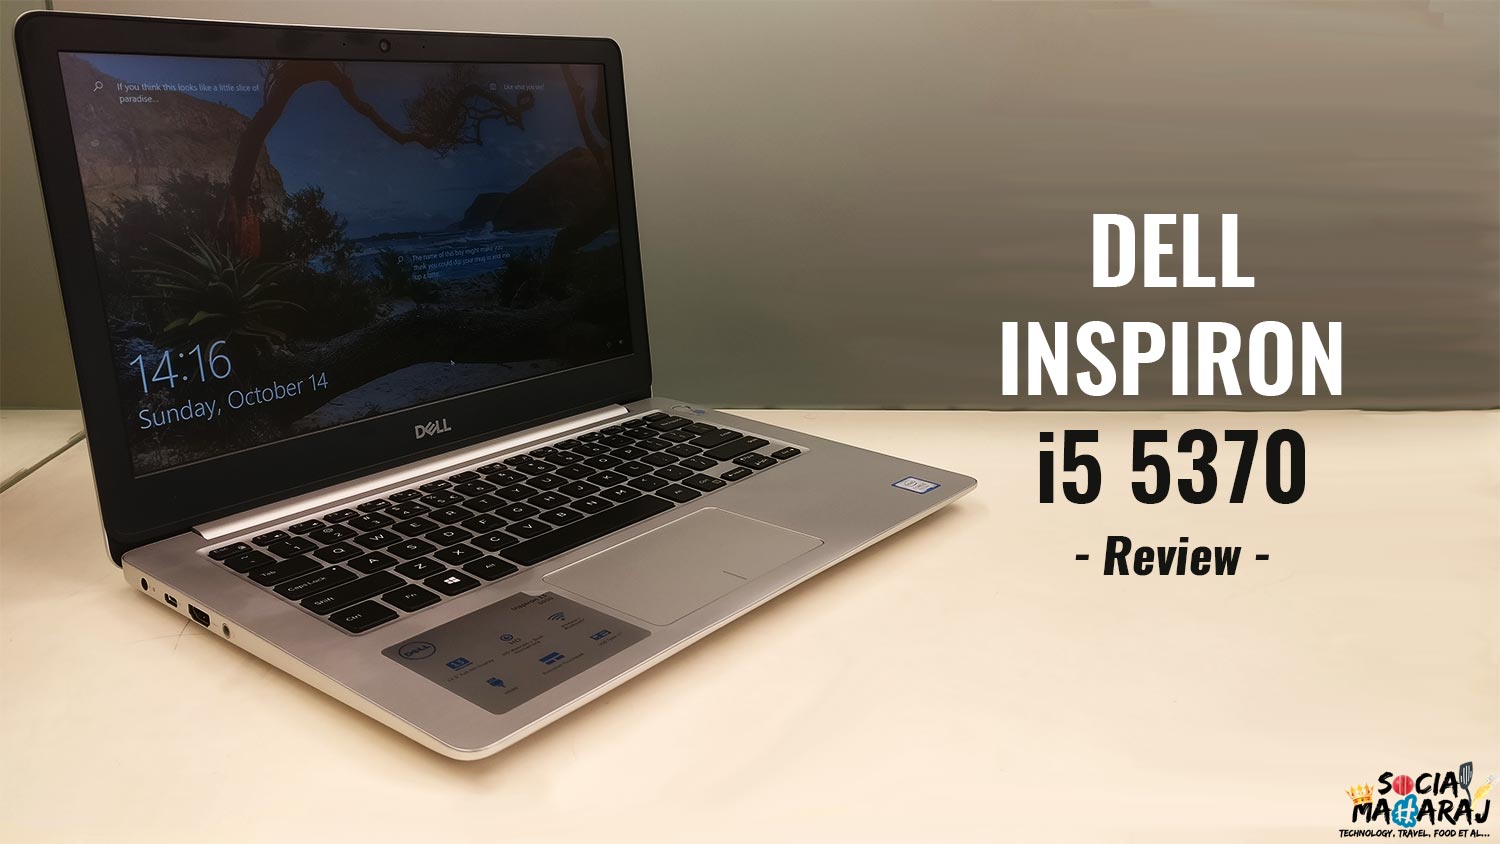 Dell Inspiron 5370 - Best Value for Money Laptop - Dell 5370